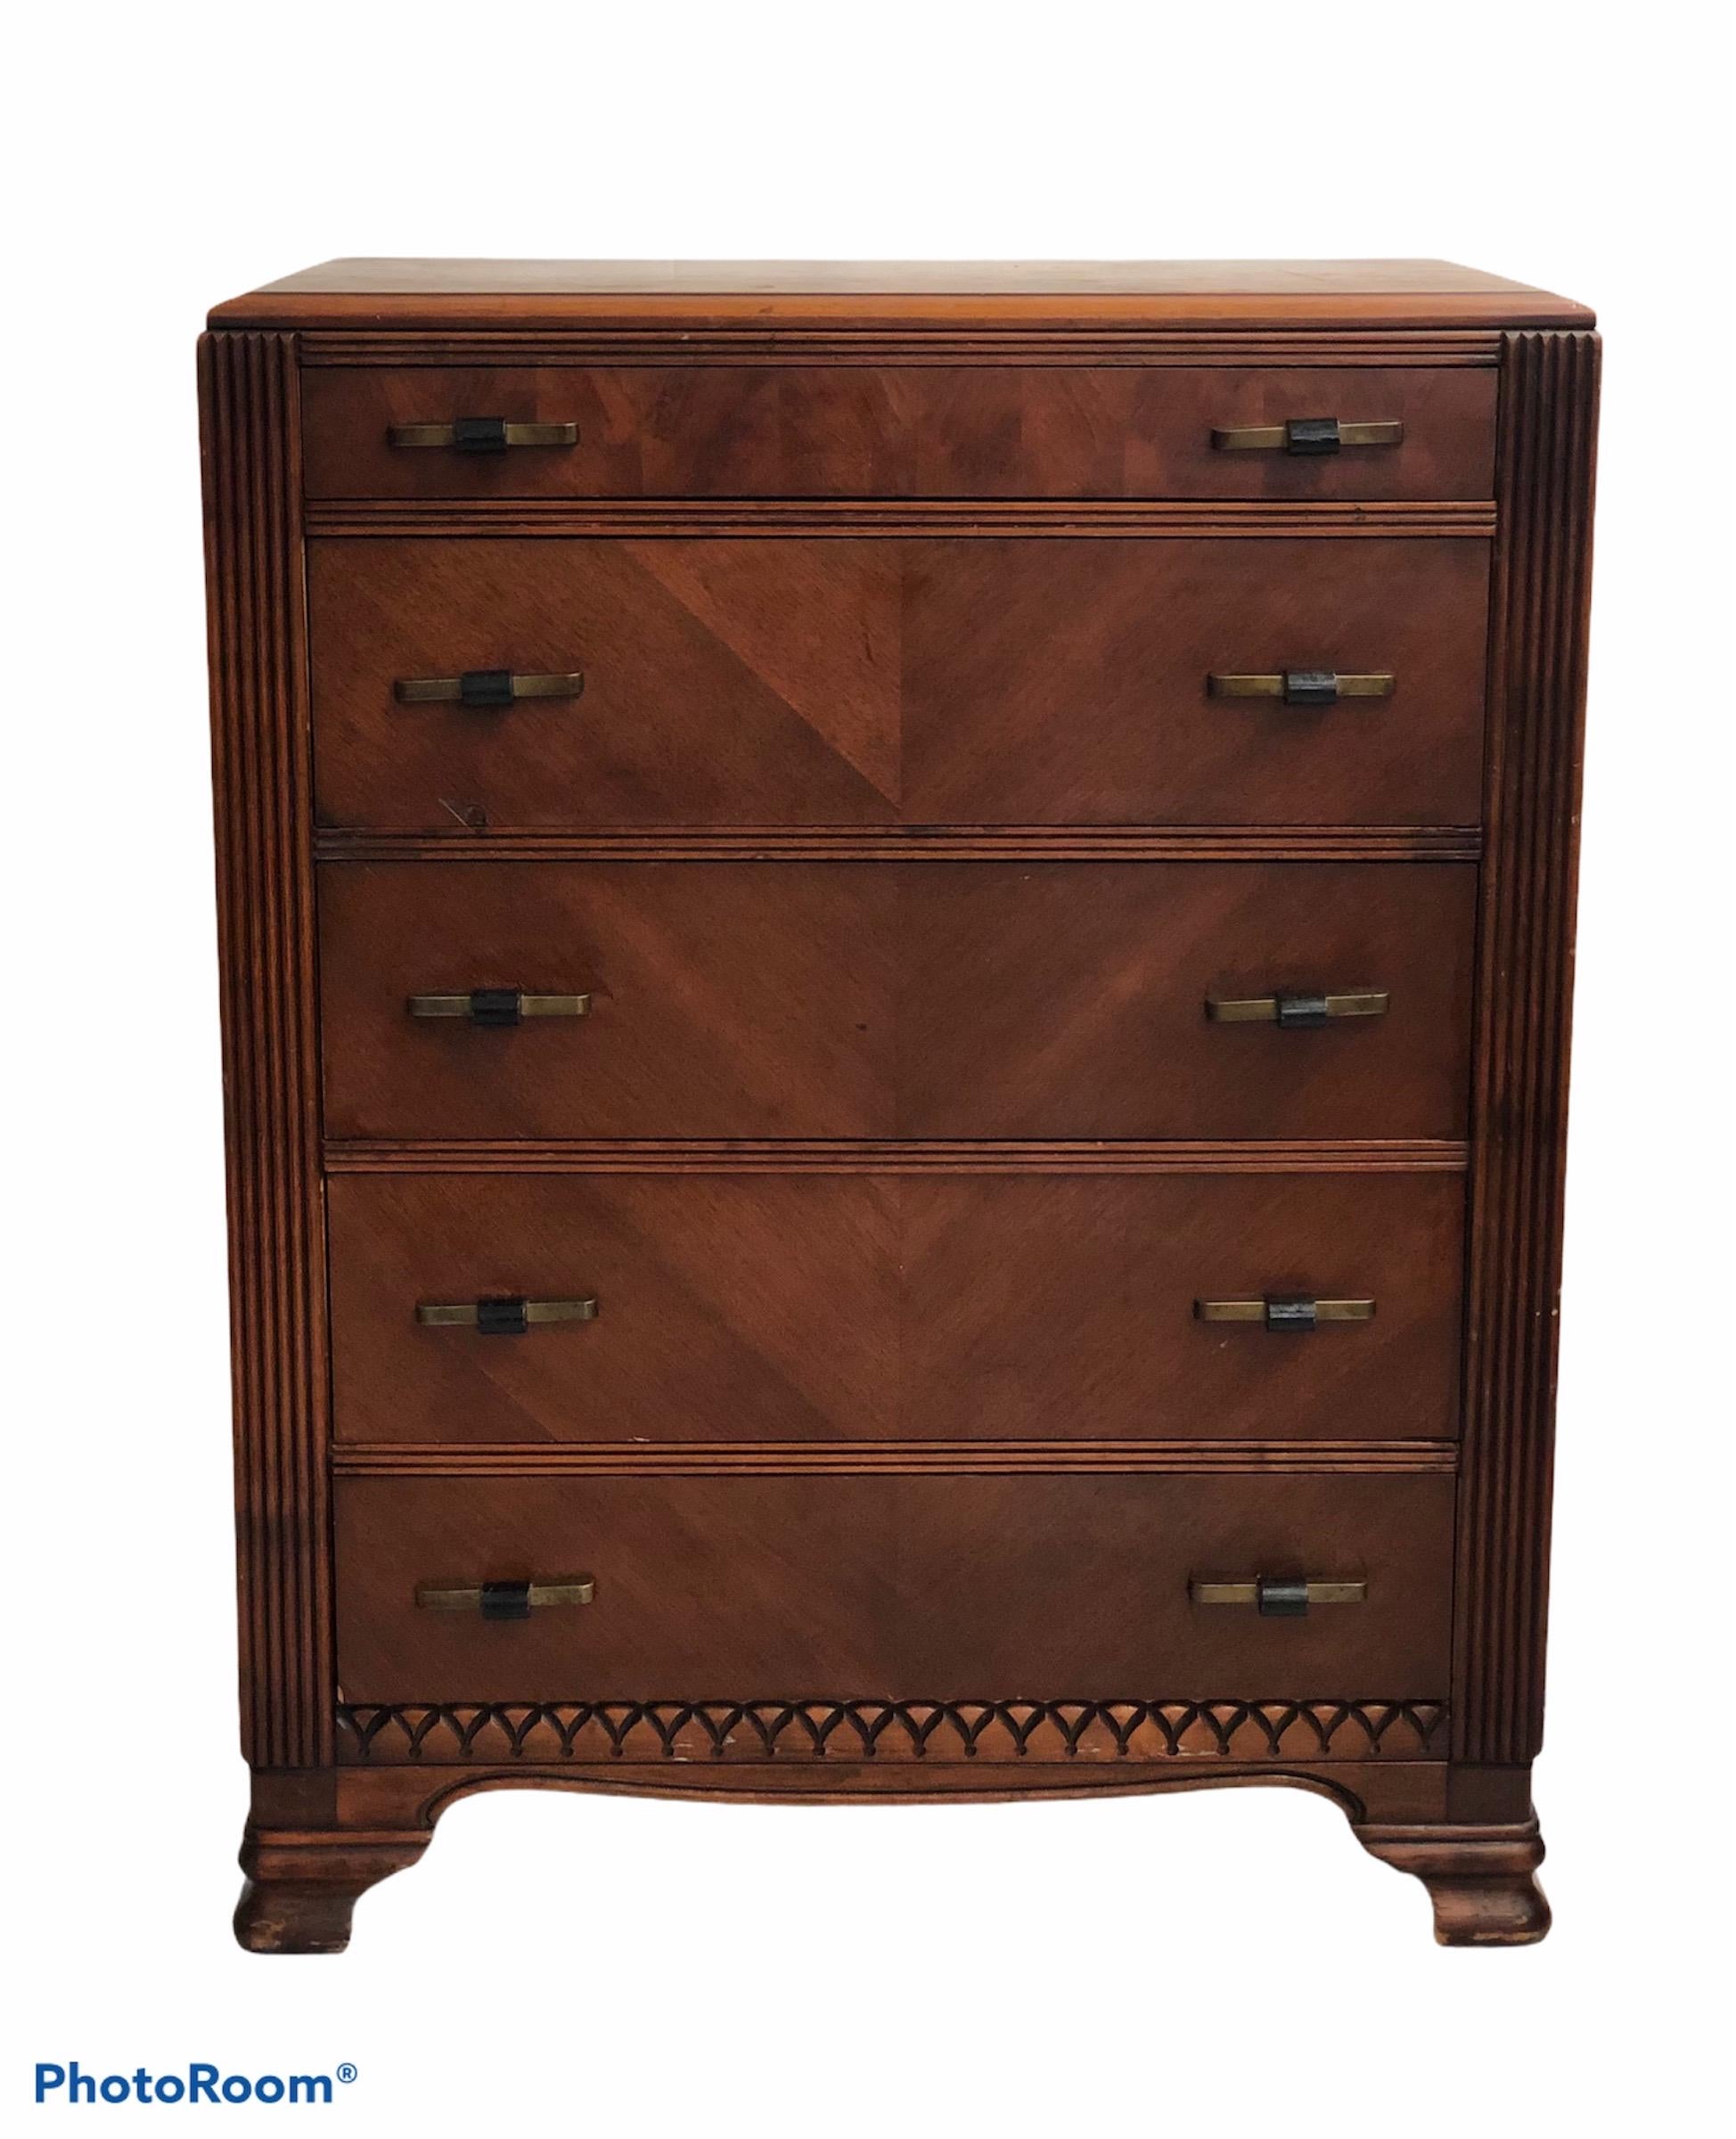 Vintage dresser with graduated drawers in walnut and burl walnut. Sturdy and sleek design with original hardware.